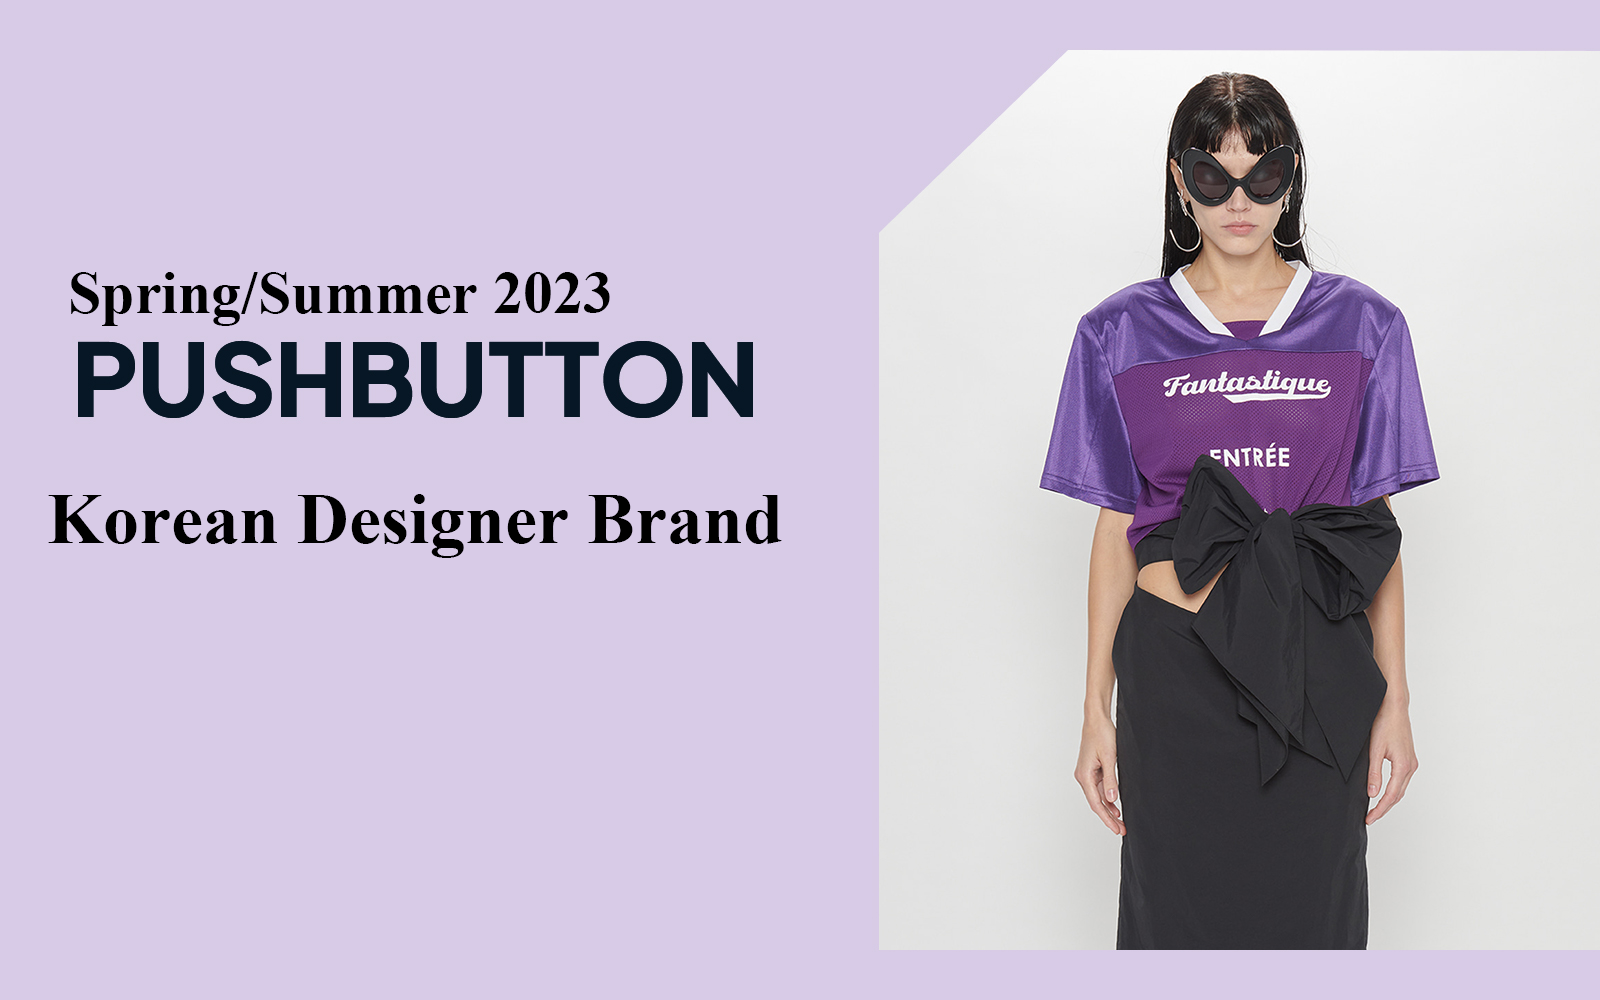 The Analysis of Pushbutton The Womenswear Designer Brand